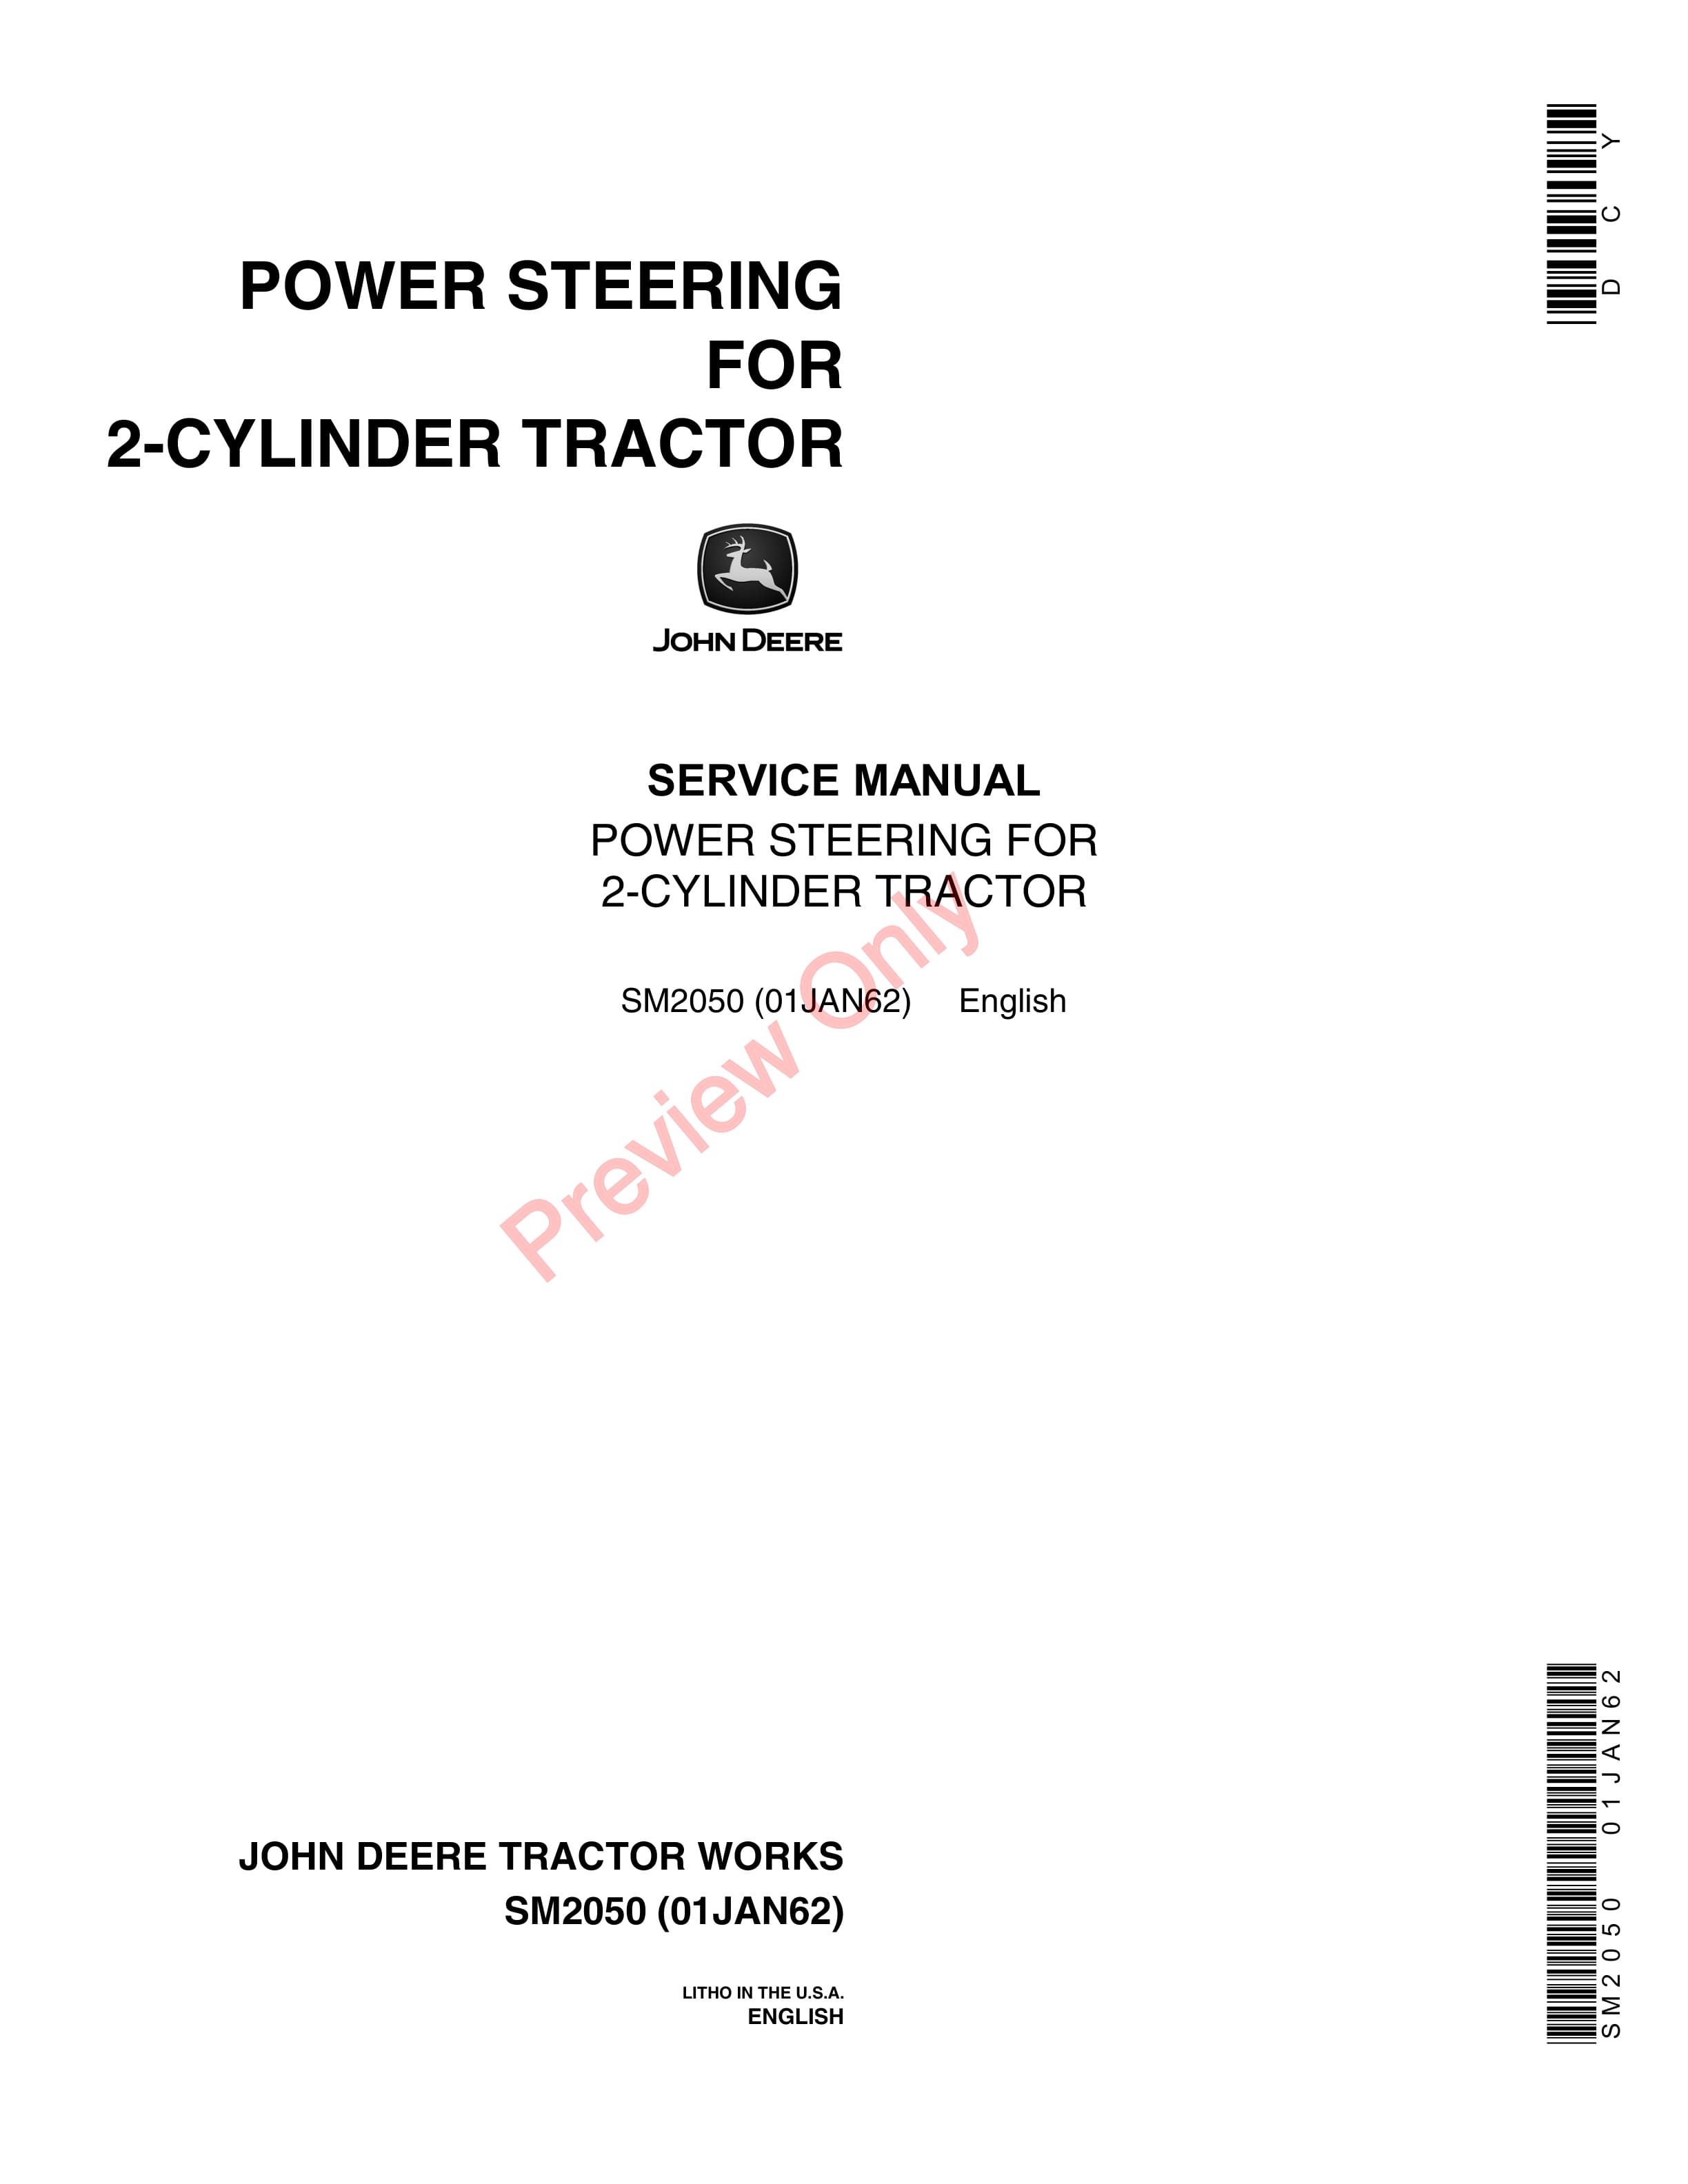 John Deere Power Steering for 2-Cylinder Tractors Service Manual SM2050 01JAN62-1